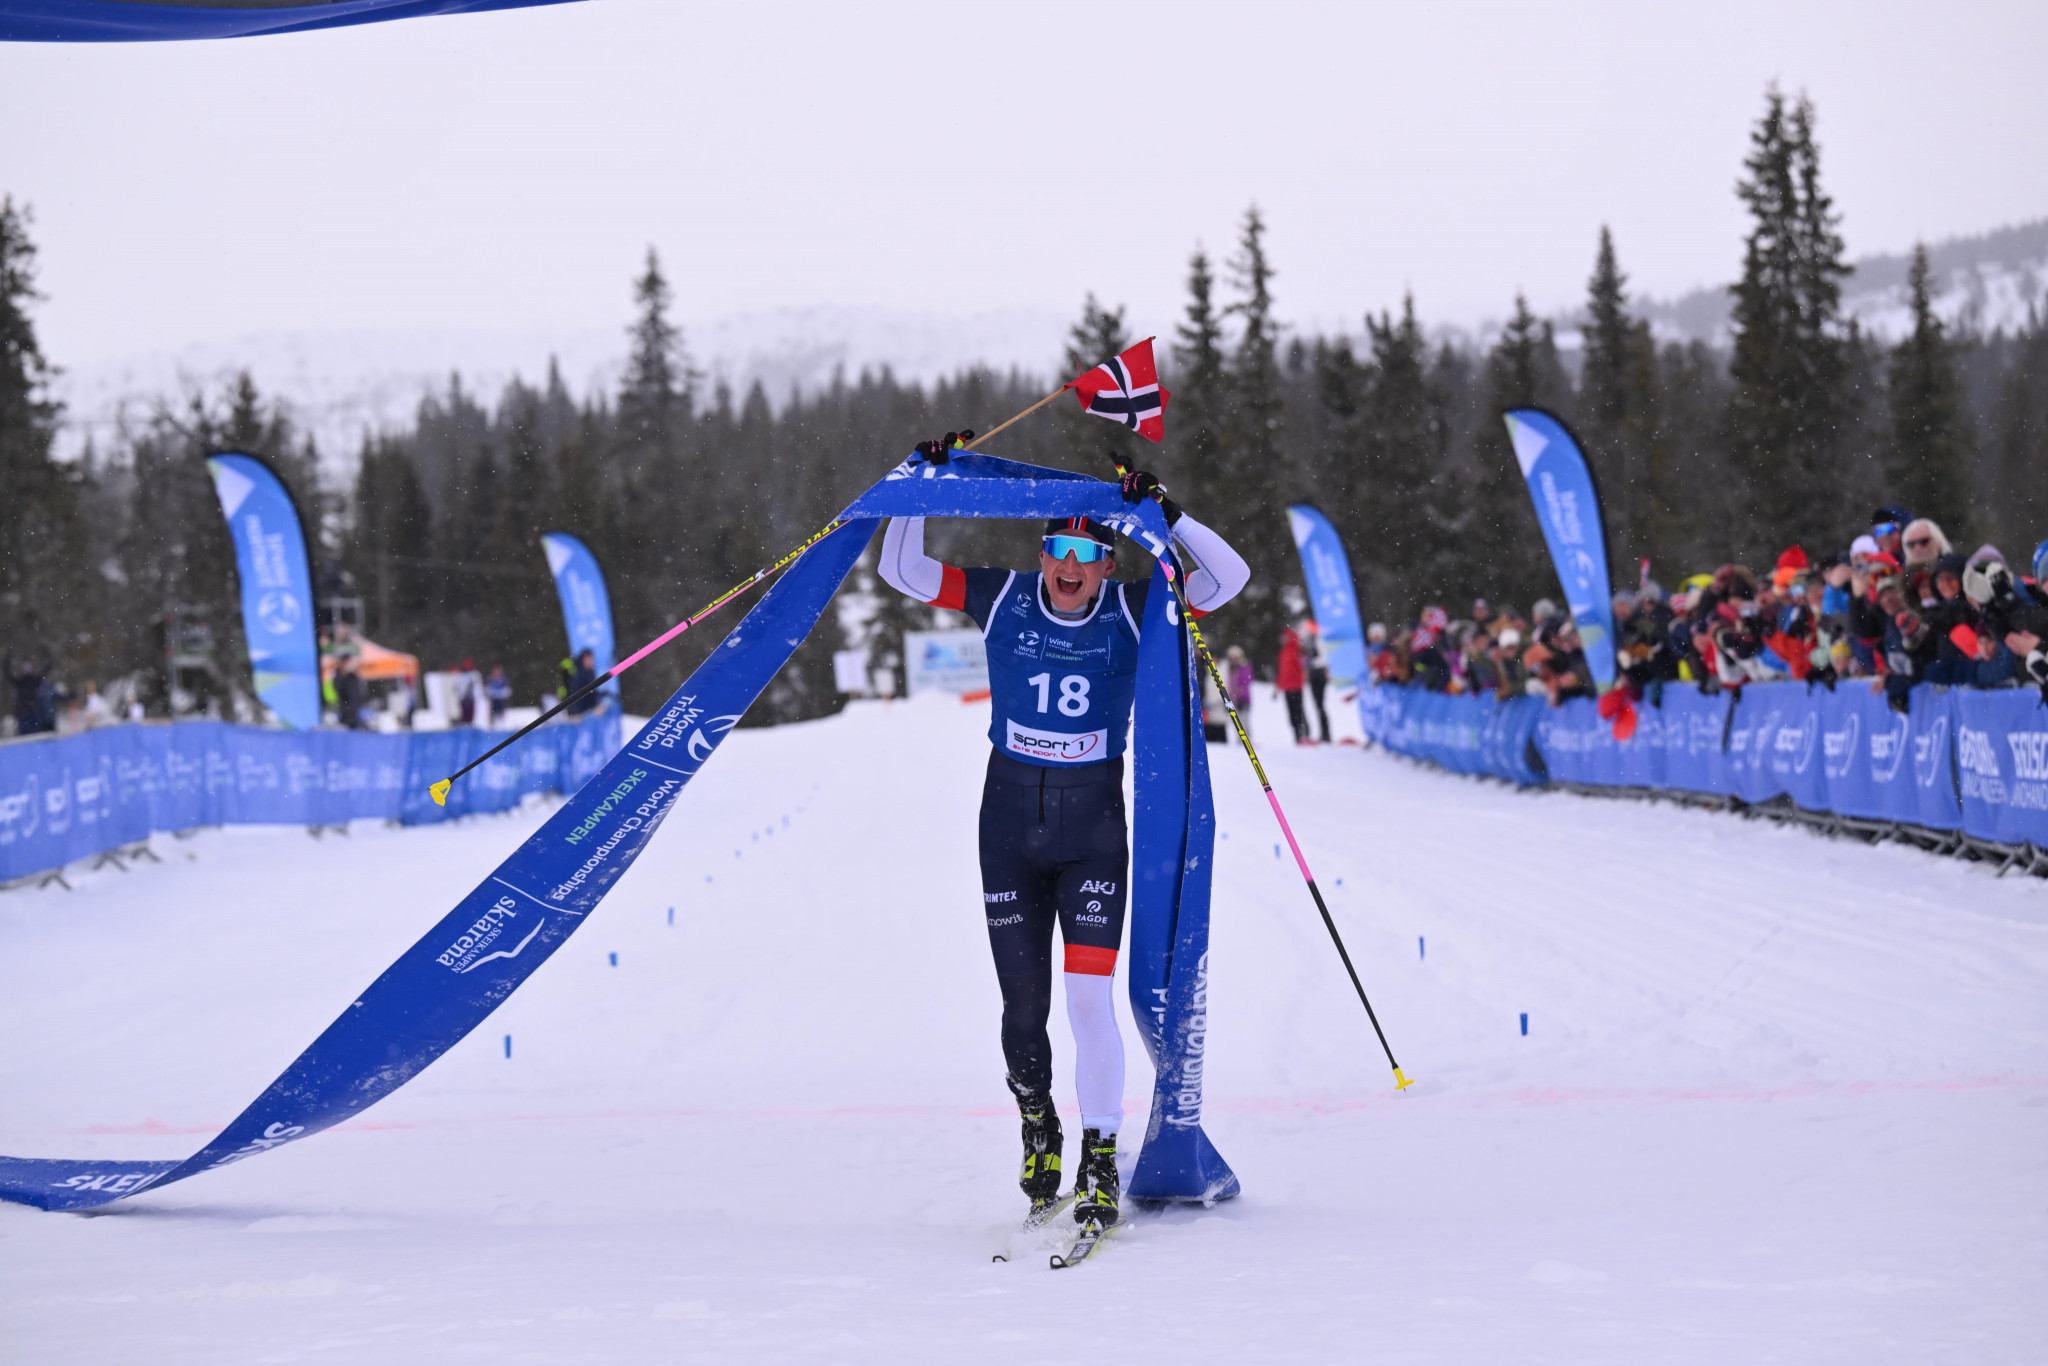 Norway's Hans Christian Tungesvik won the men's elite triathlon race by more than one minute in Skeikampen ©World Triathlon